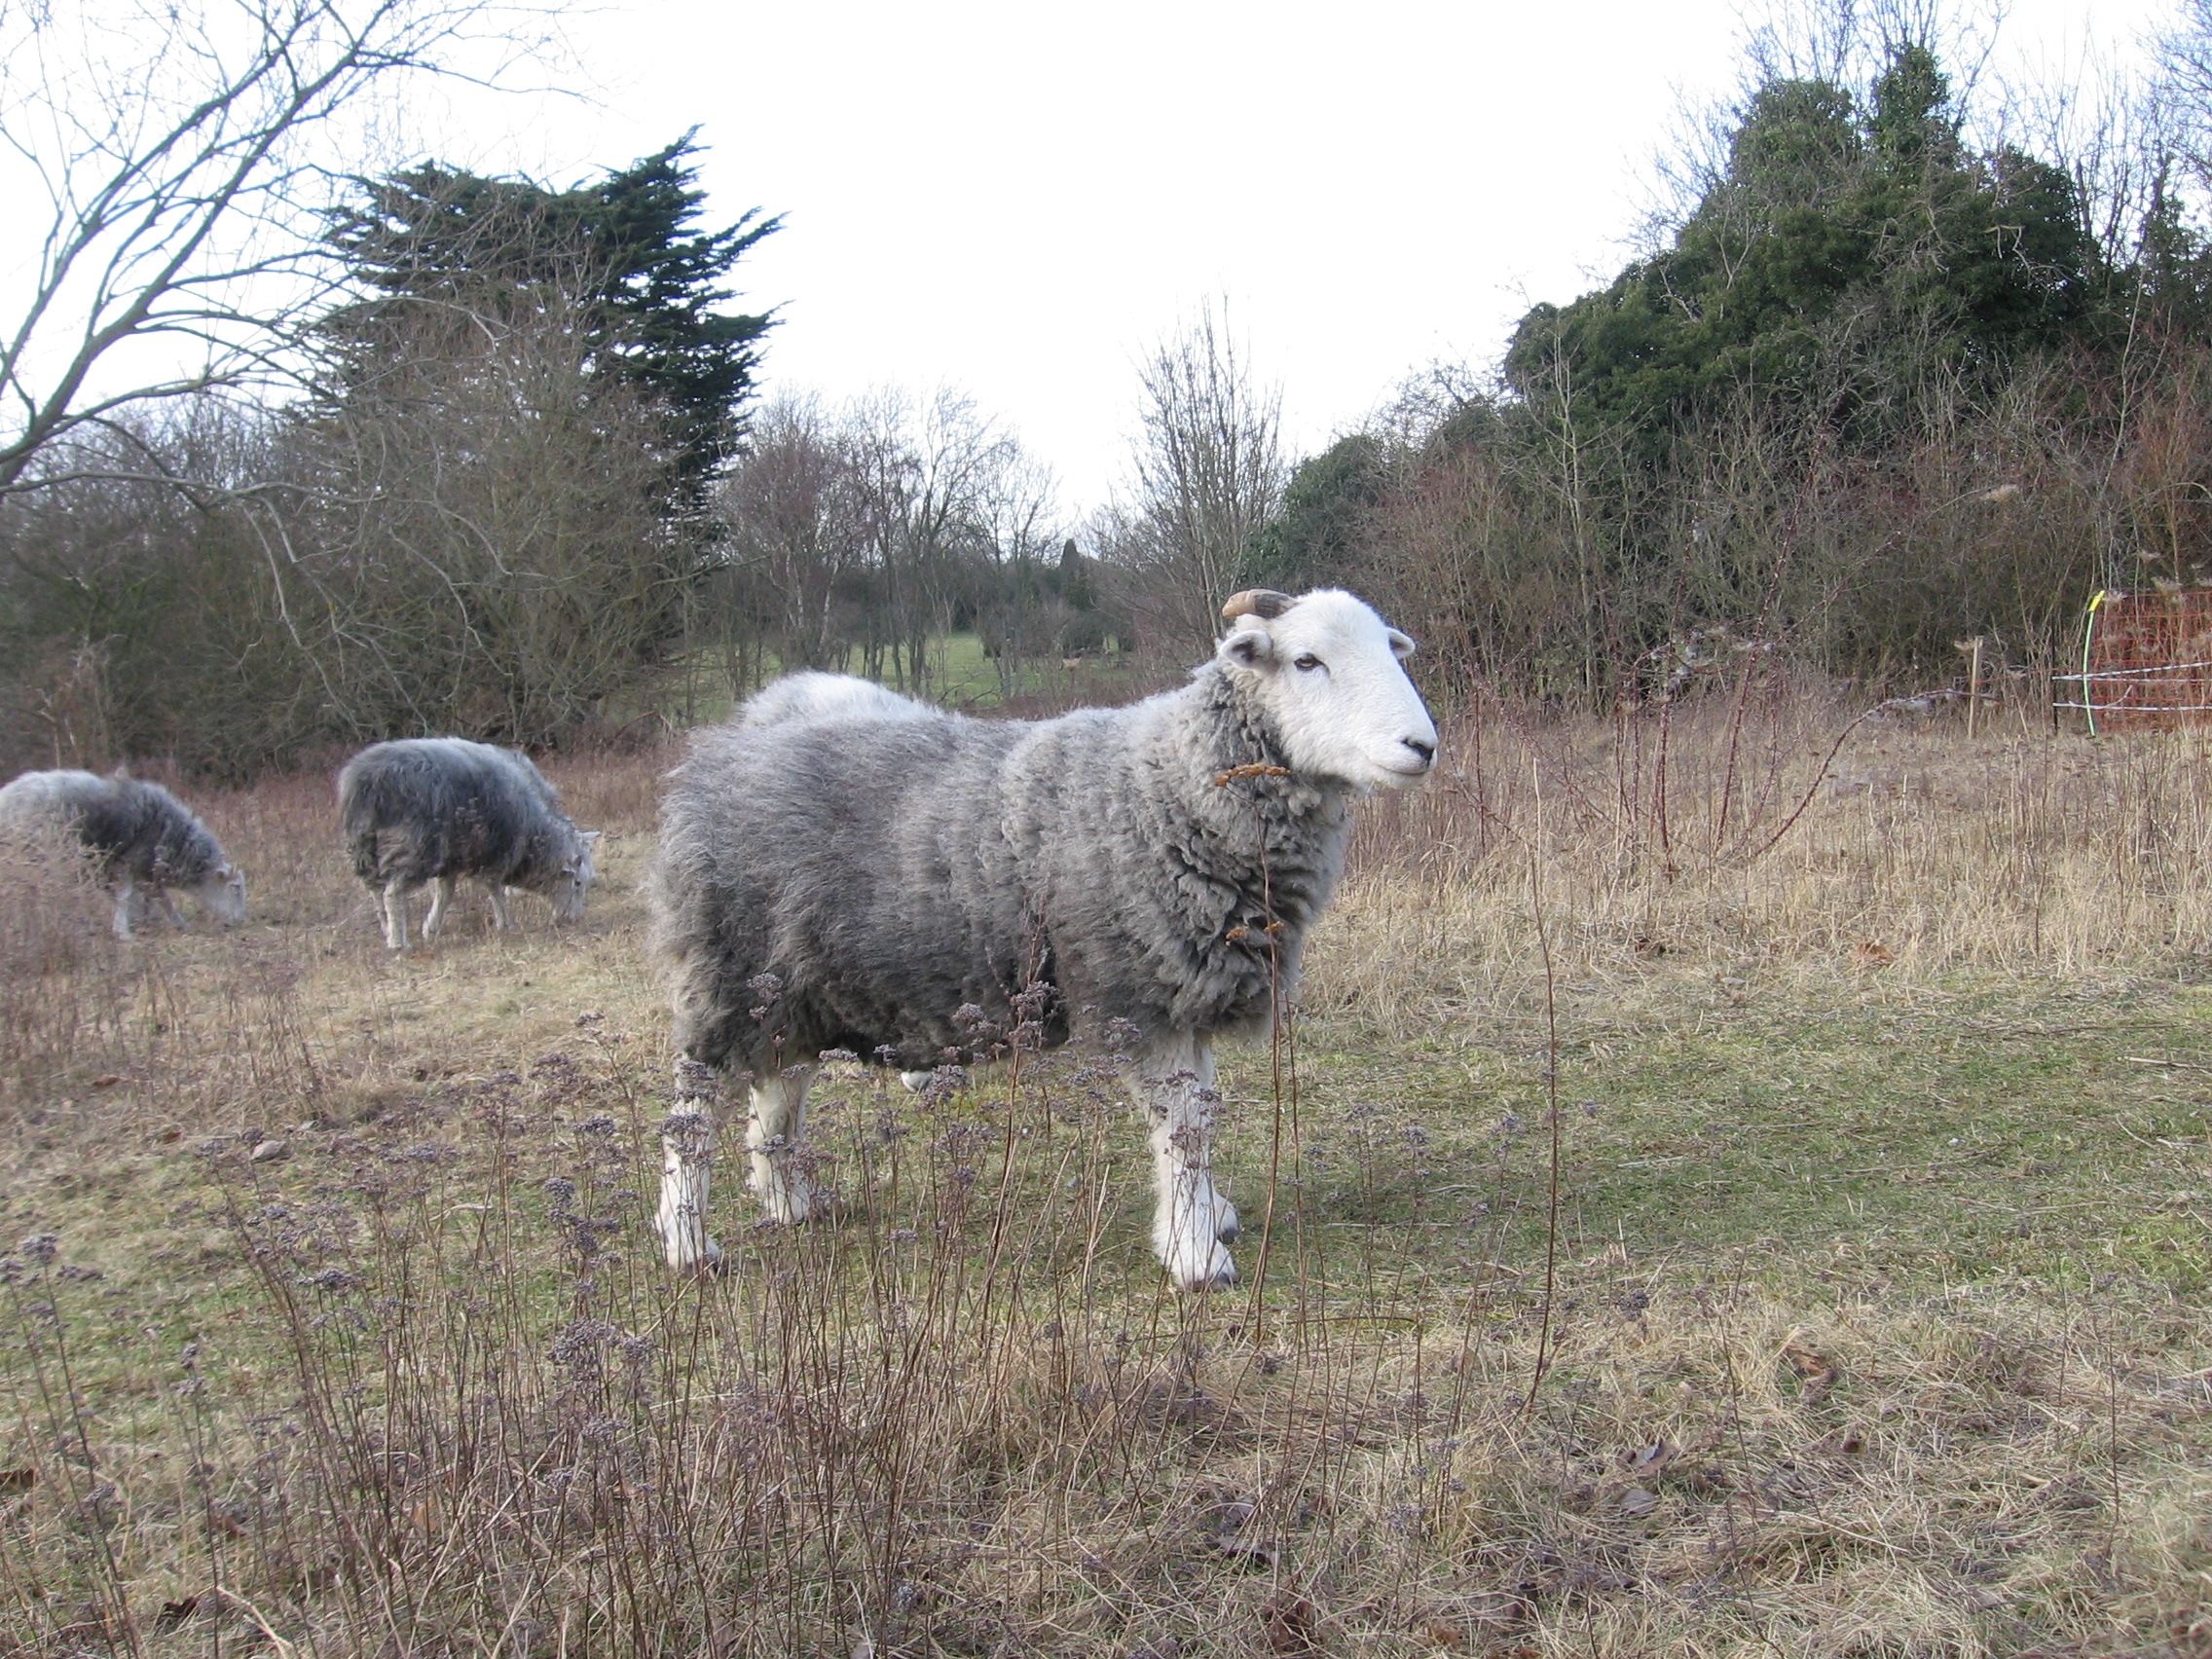 Sheep grazing at Cuddington Meadows during the winter